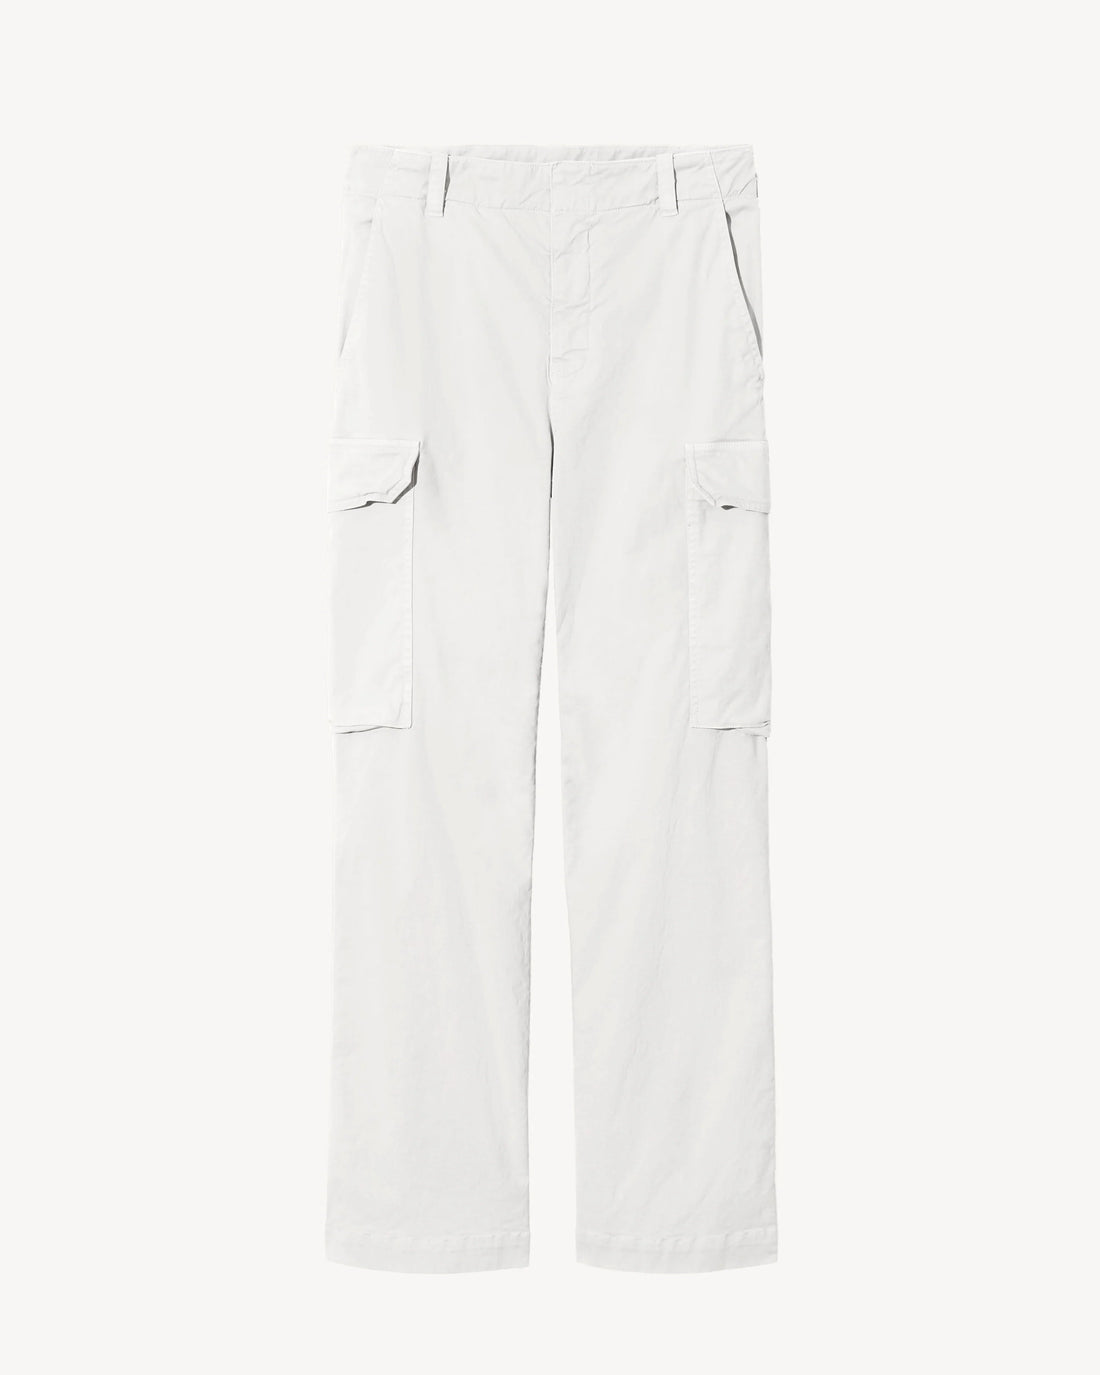 Leofred Cargo Pant - White